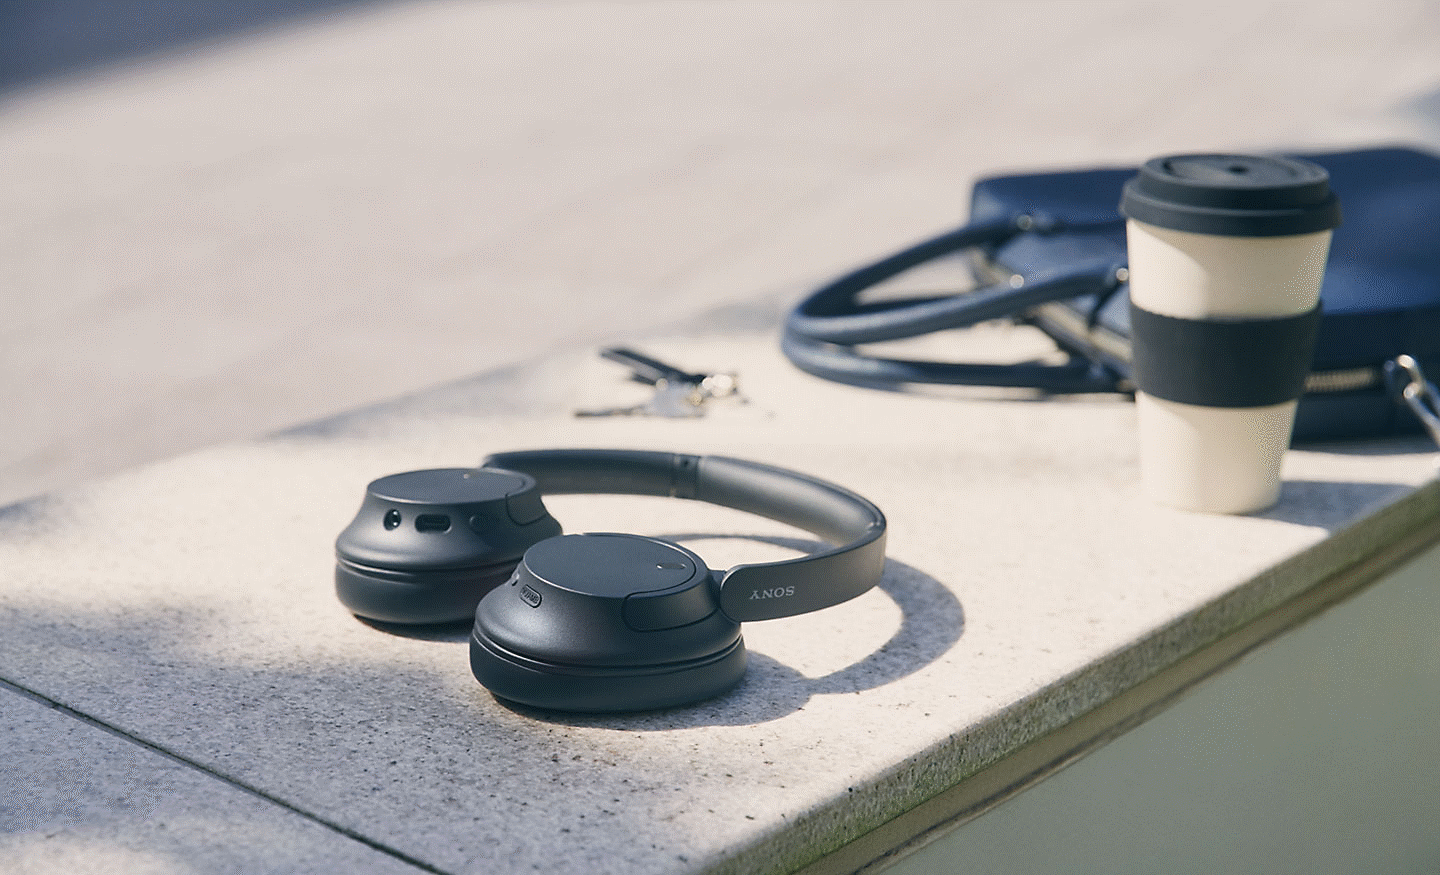 Изображение на чифт черни слушалки Sony WH-CH720 на стена с чаша кафе и чанта